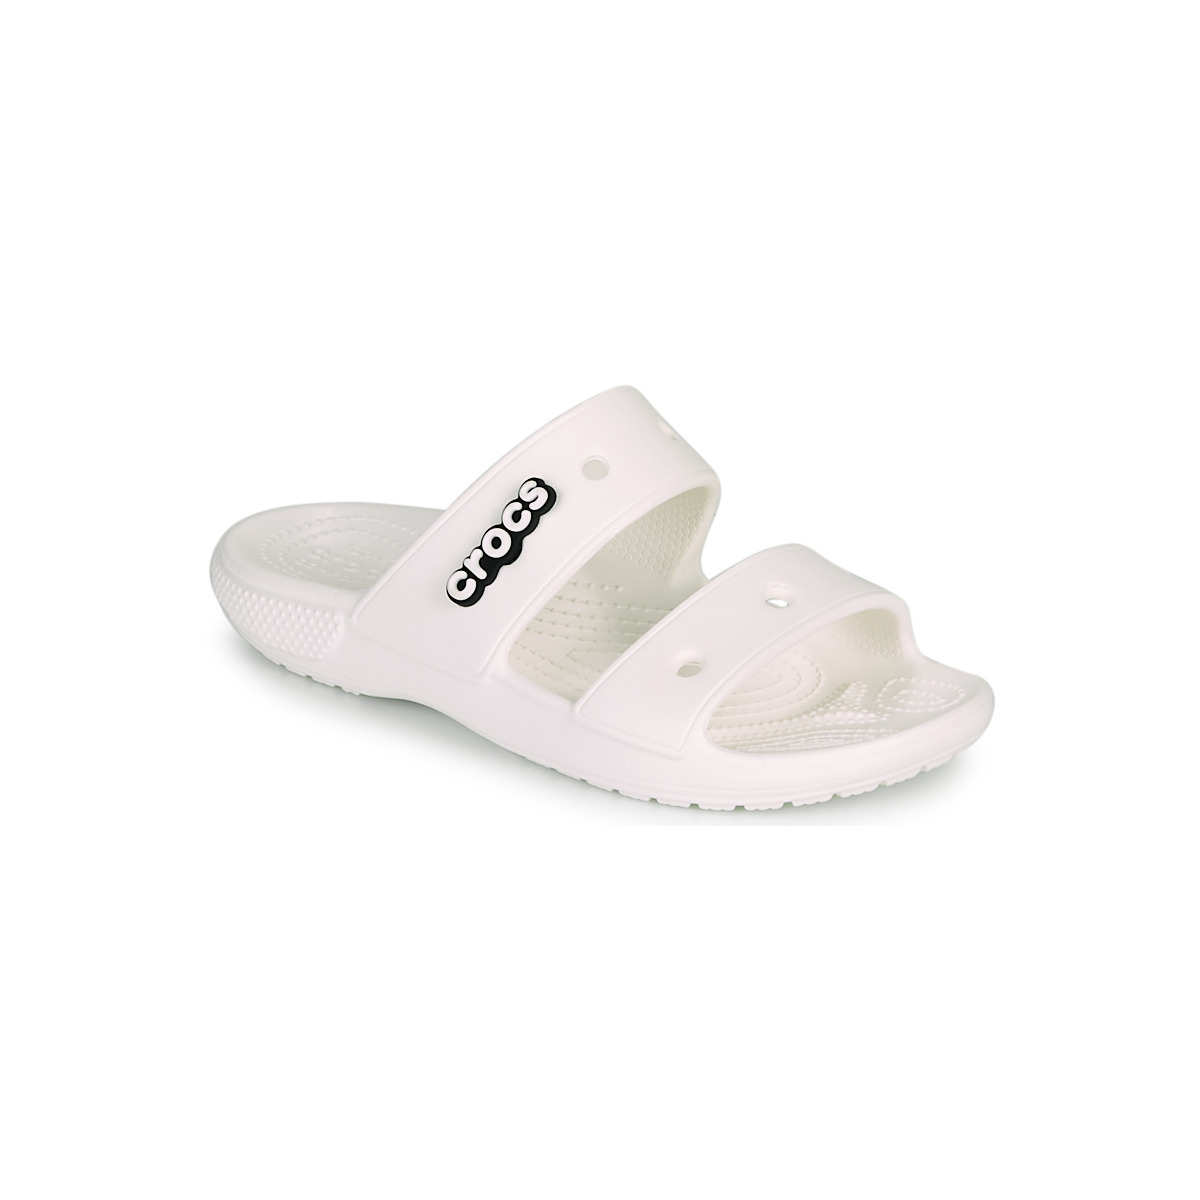 Spartoo - White - Men's Slippers - Crocs GOOFASH